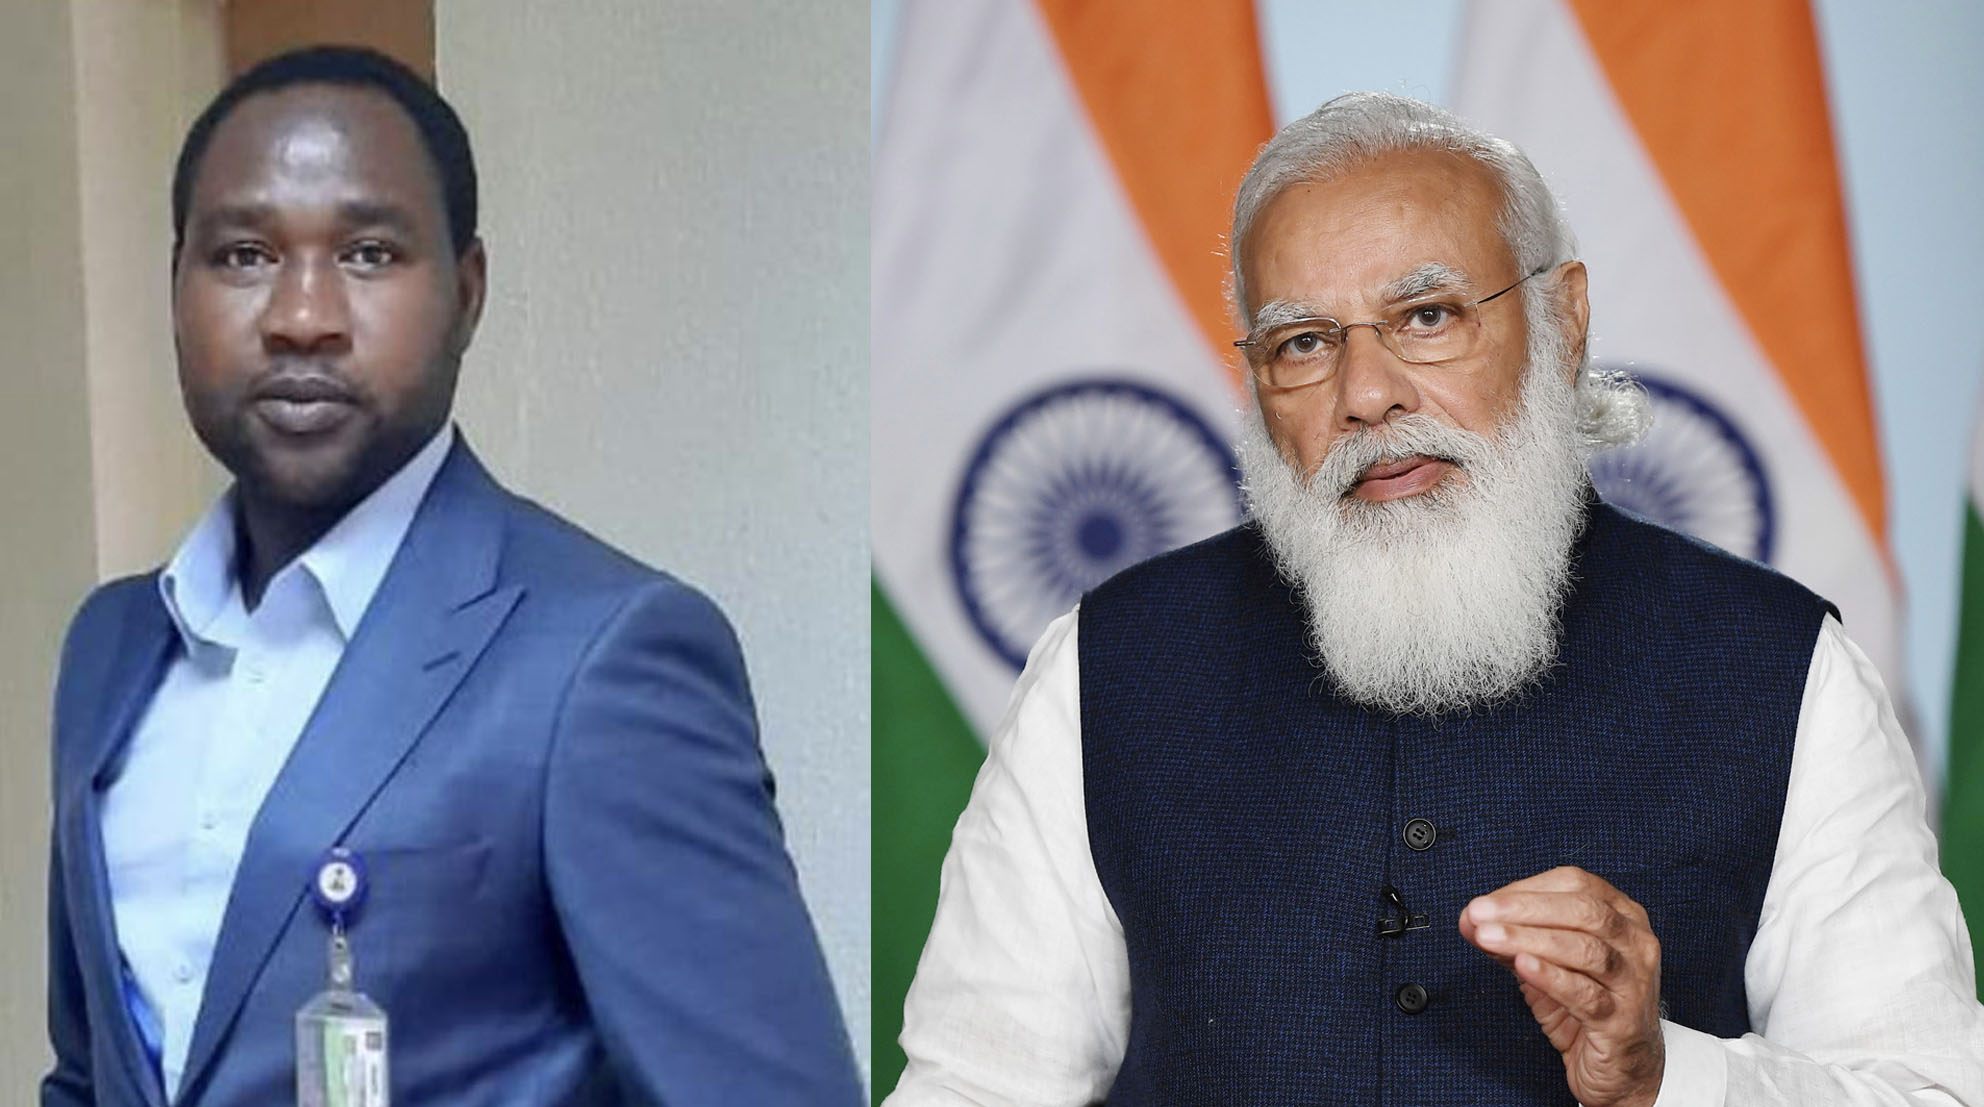 Imprisoned Nigerian freethinker Mubarak Bala (left) and Indian Prime Minister Narendra Modi (right)